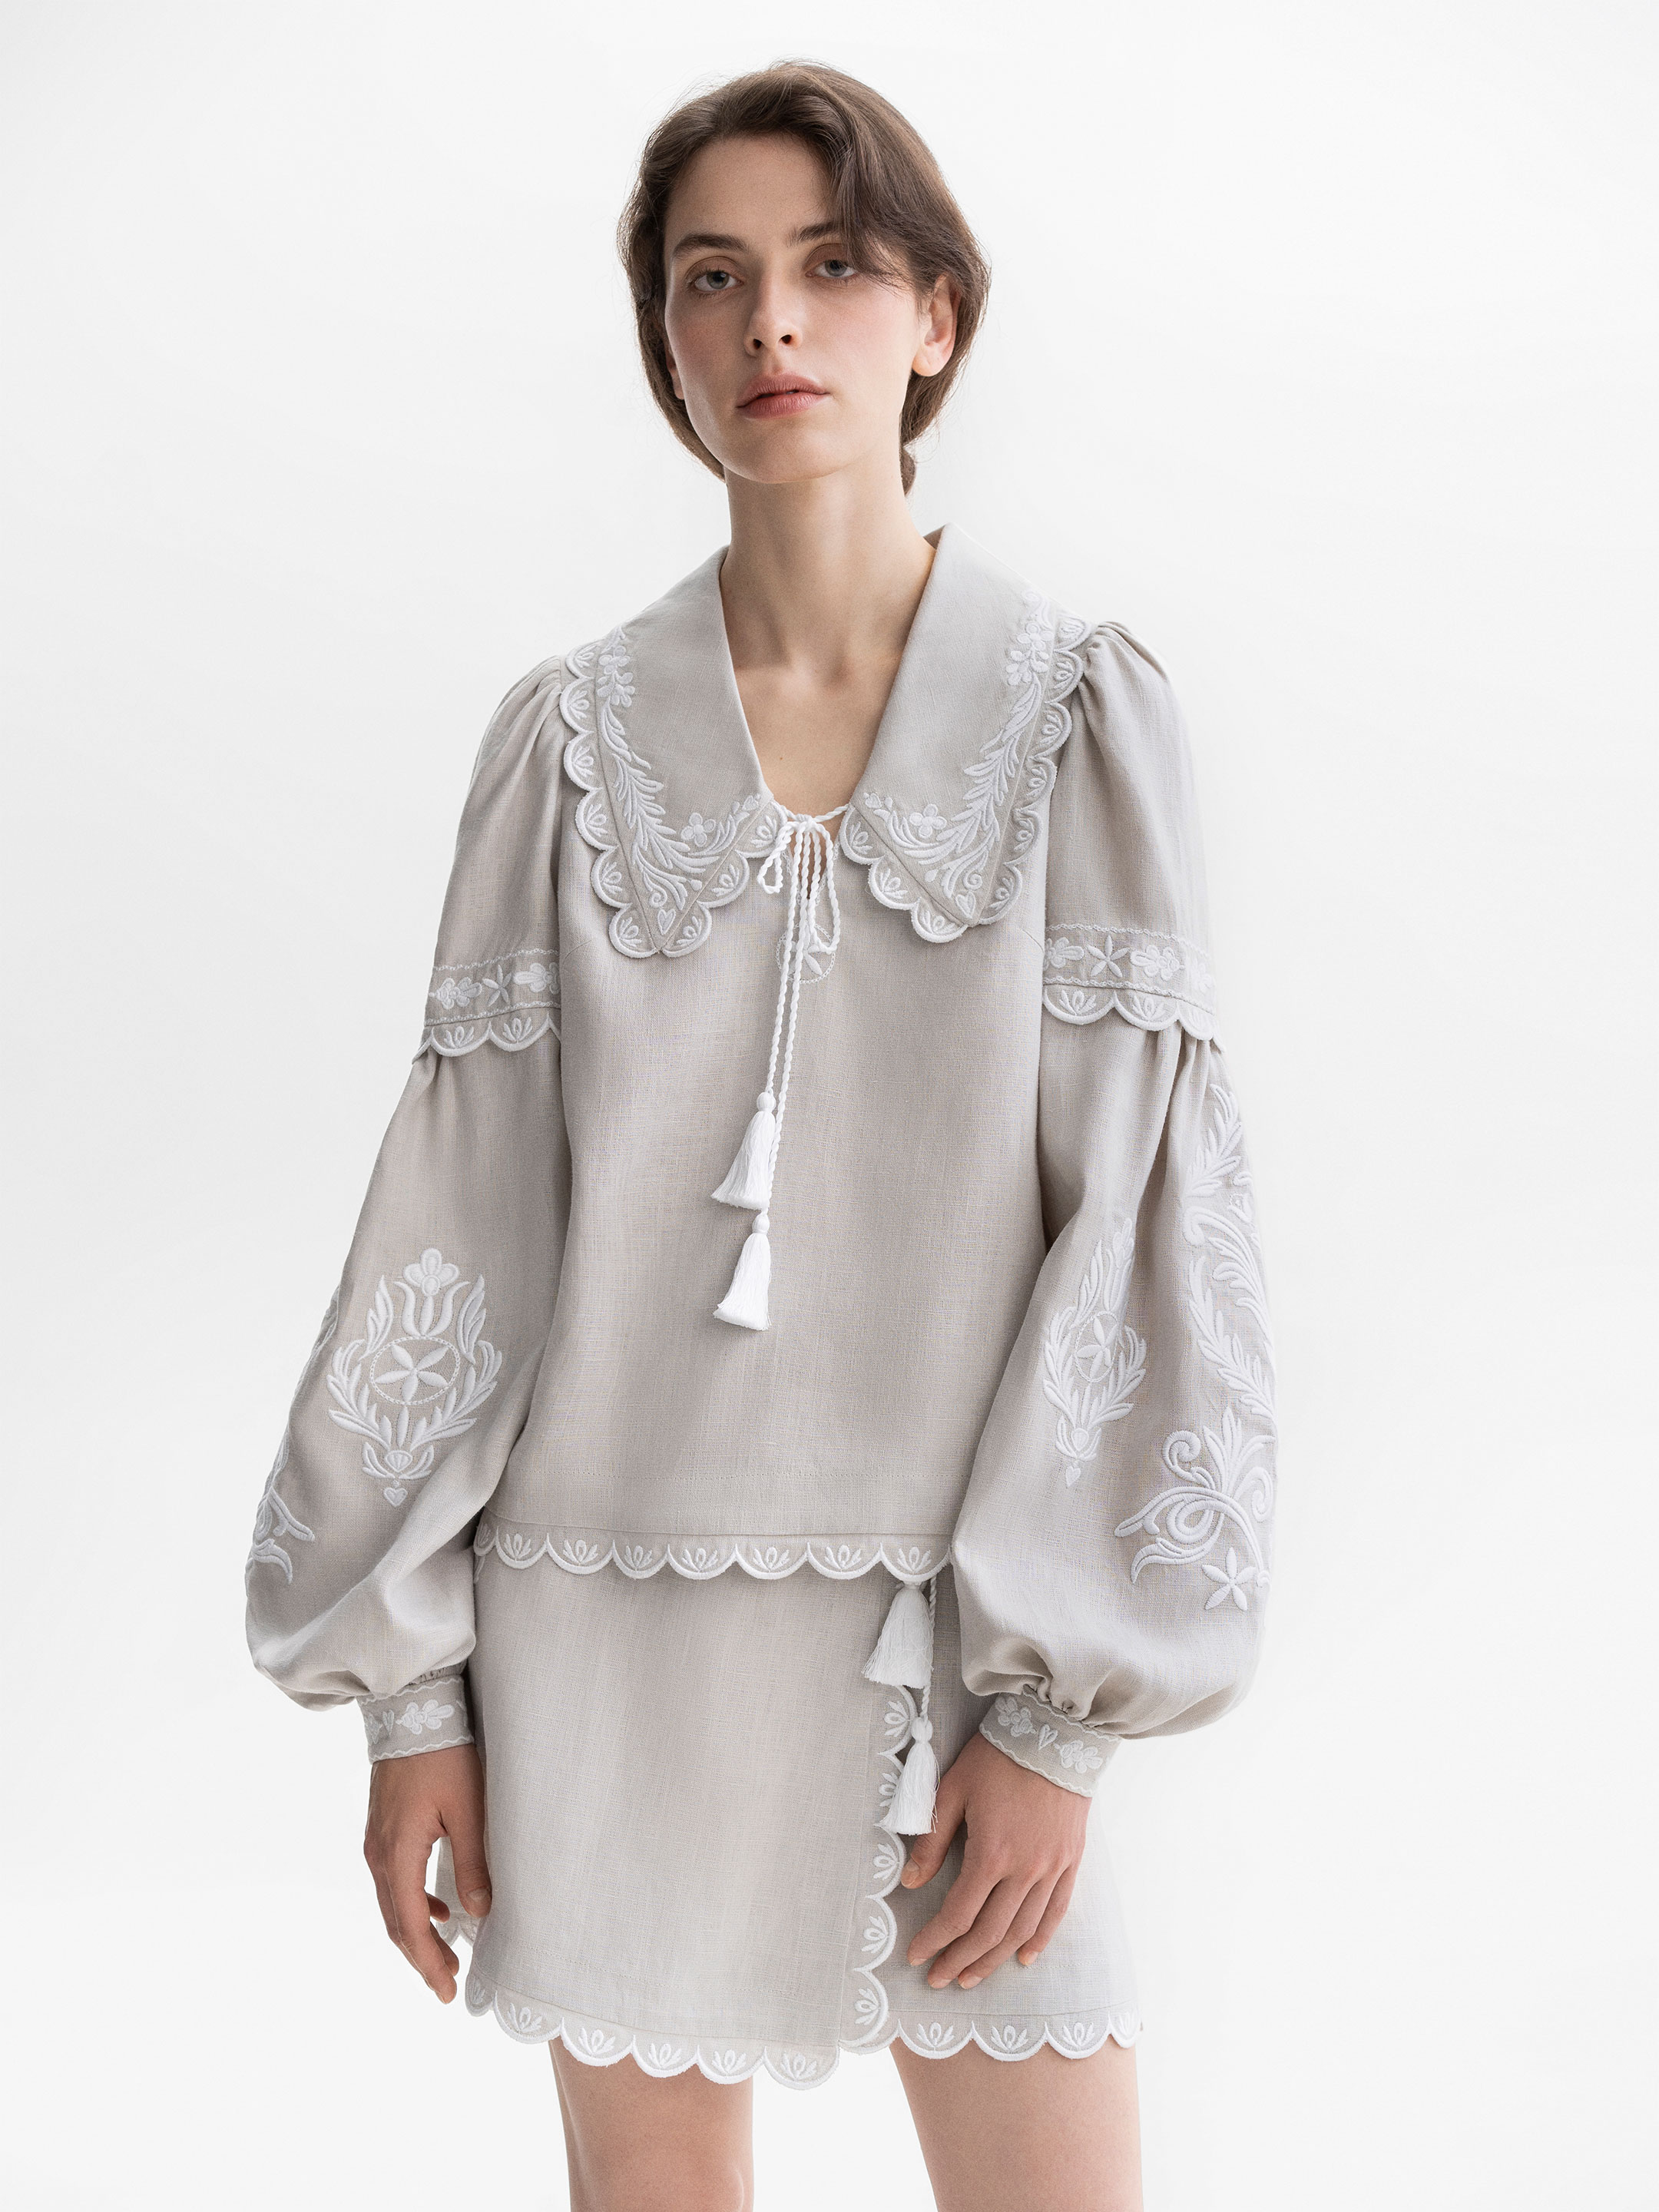 Gray linen blouse with white embroidery Kakhovka - photo 1